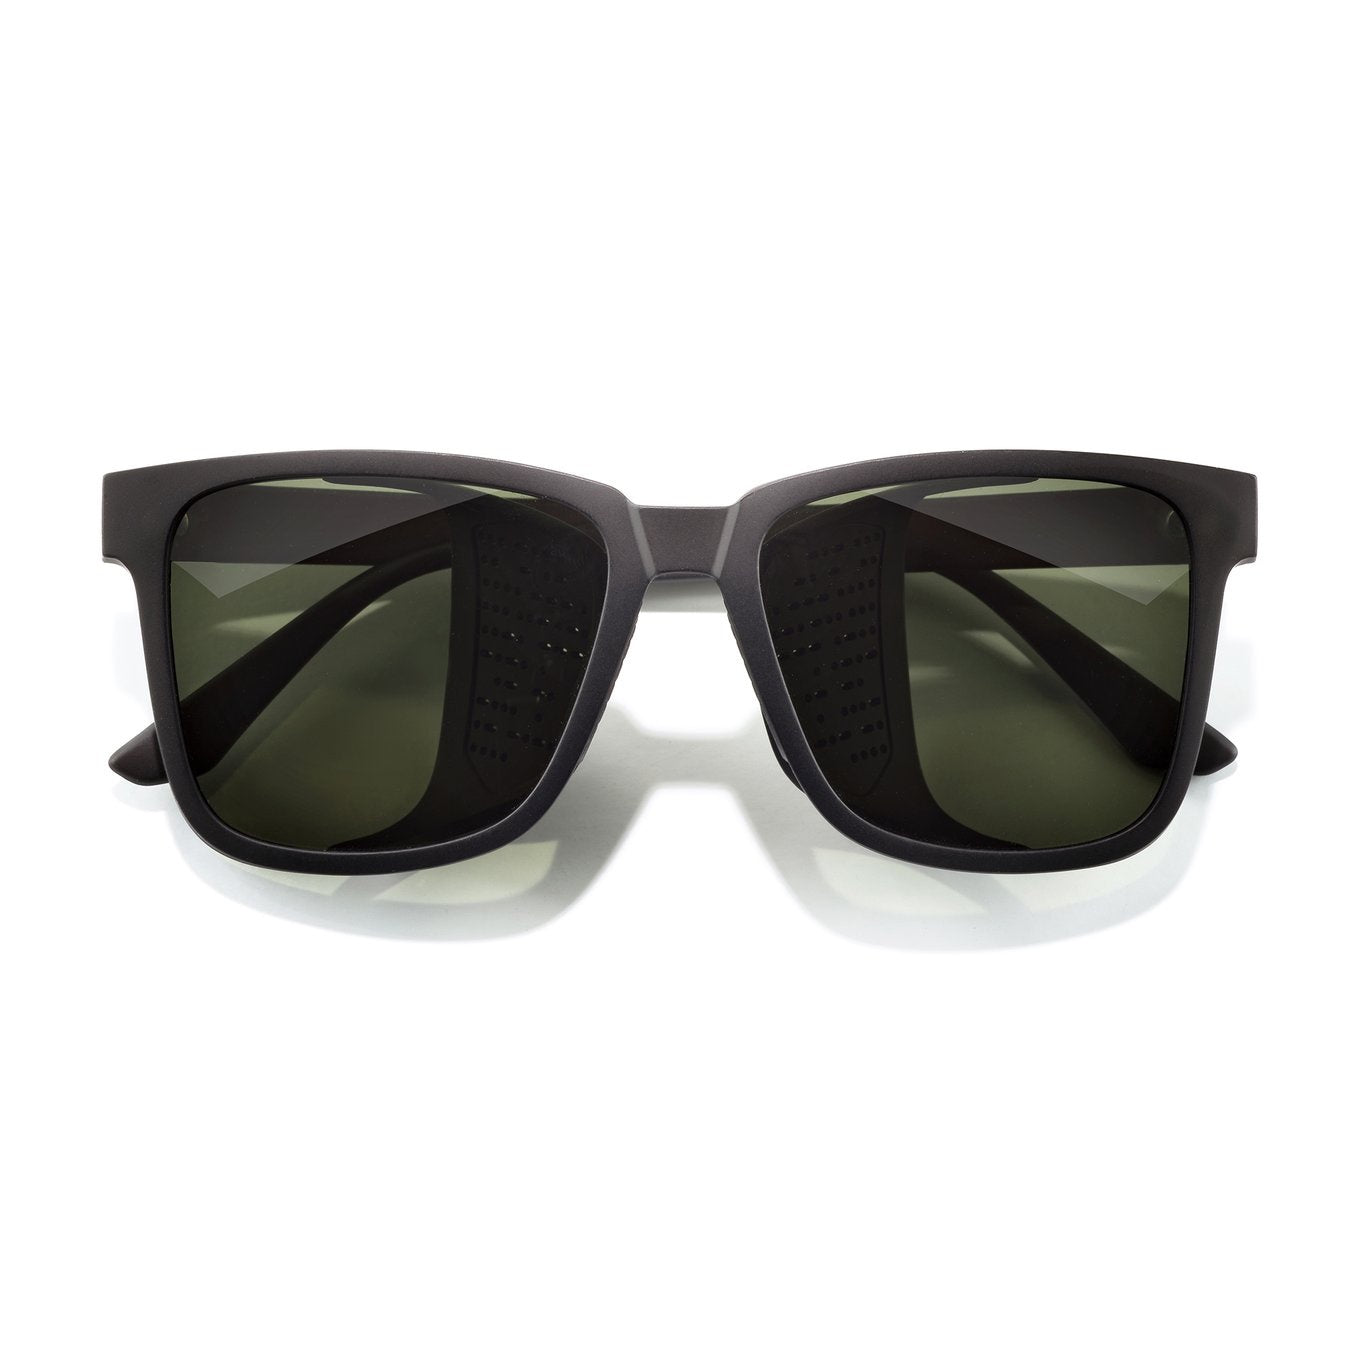 SUNSKI Sunglasses - Couloir Black Forest